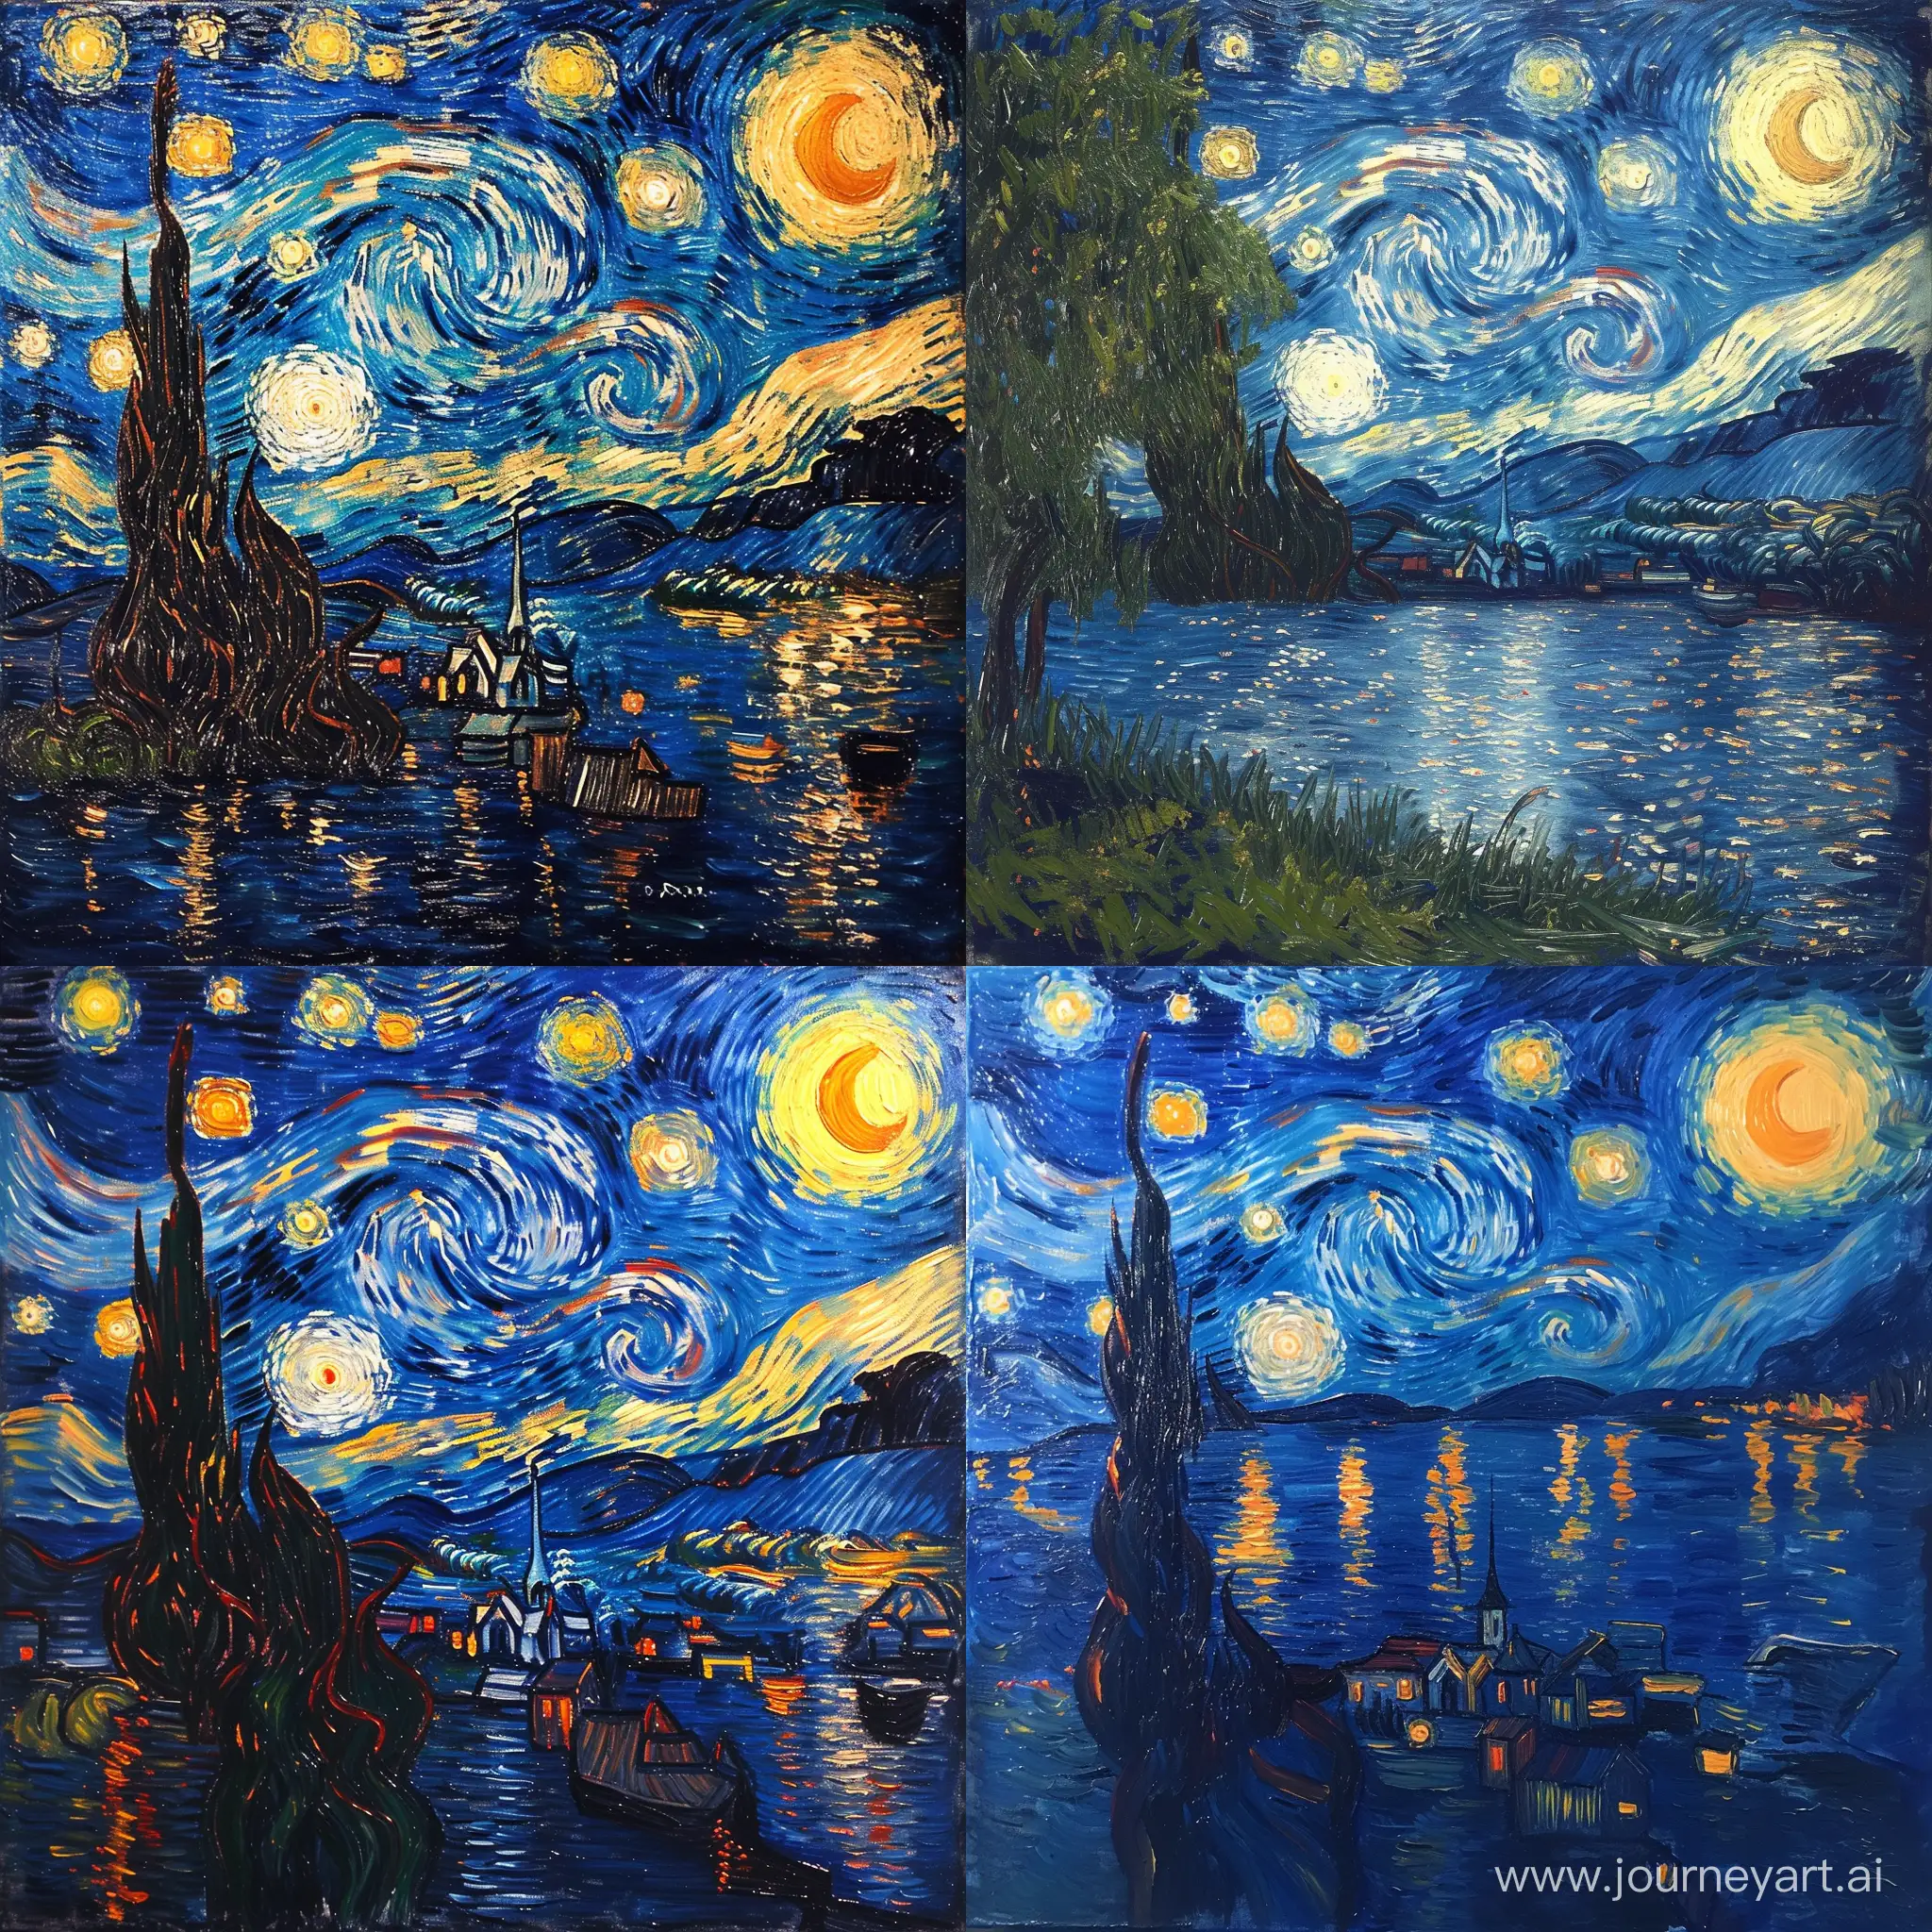 Monet style of van Gogh starry night